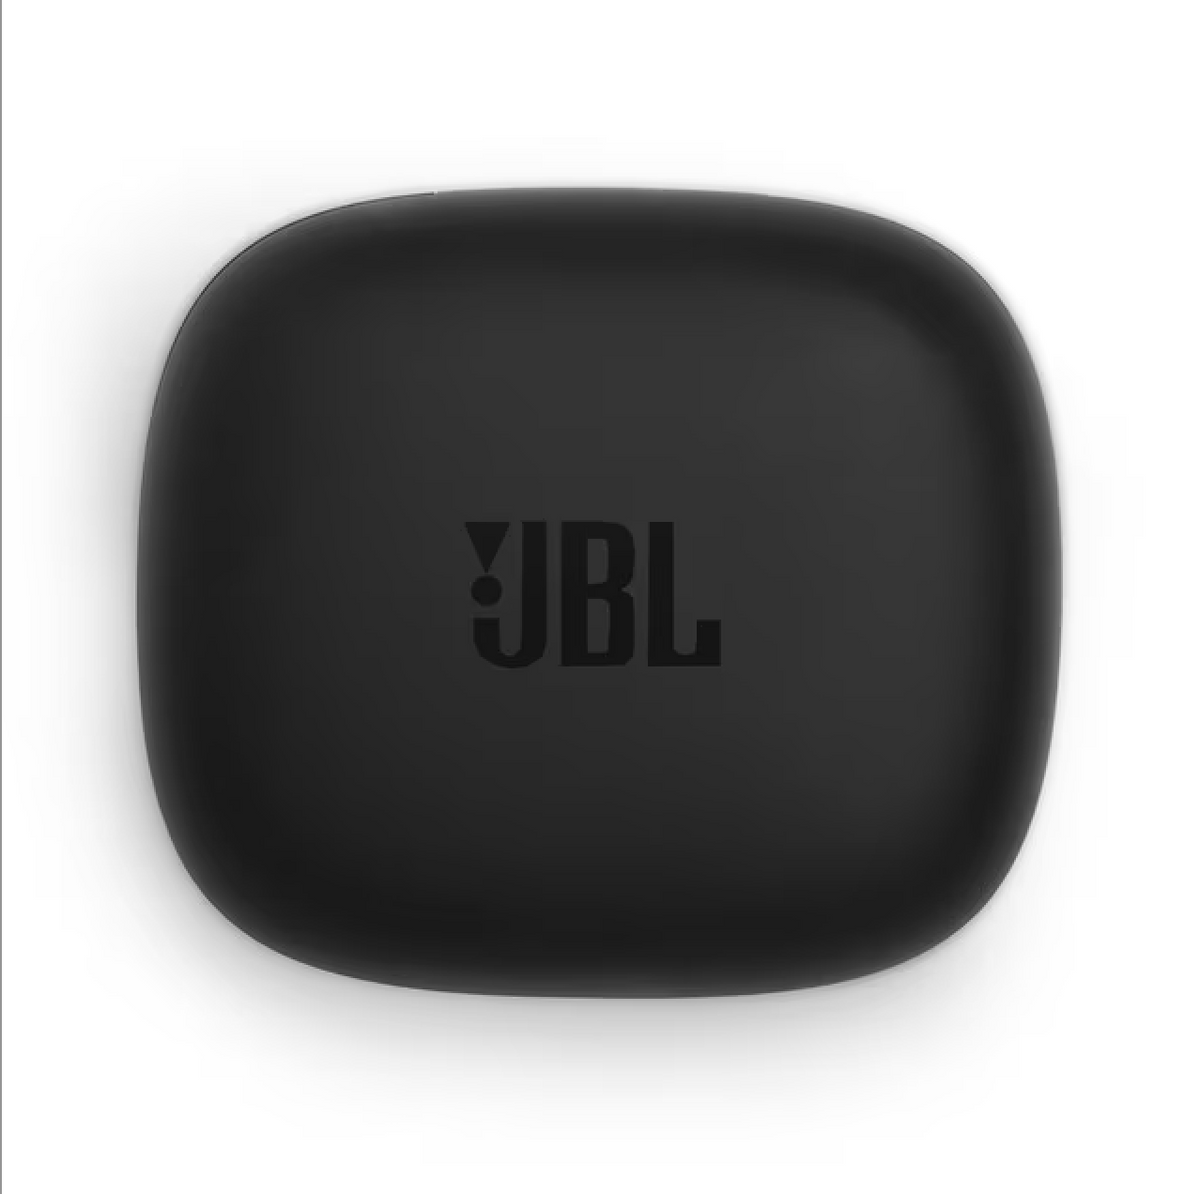 JBL Live Pro 2